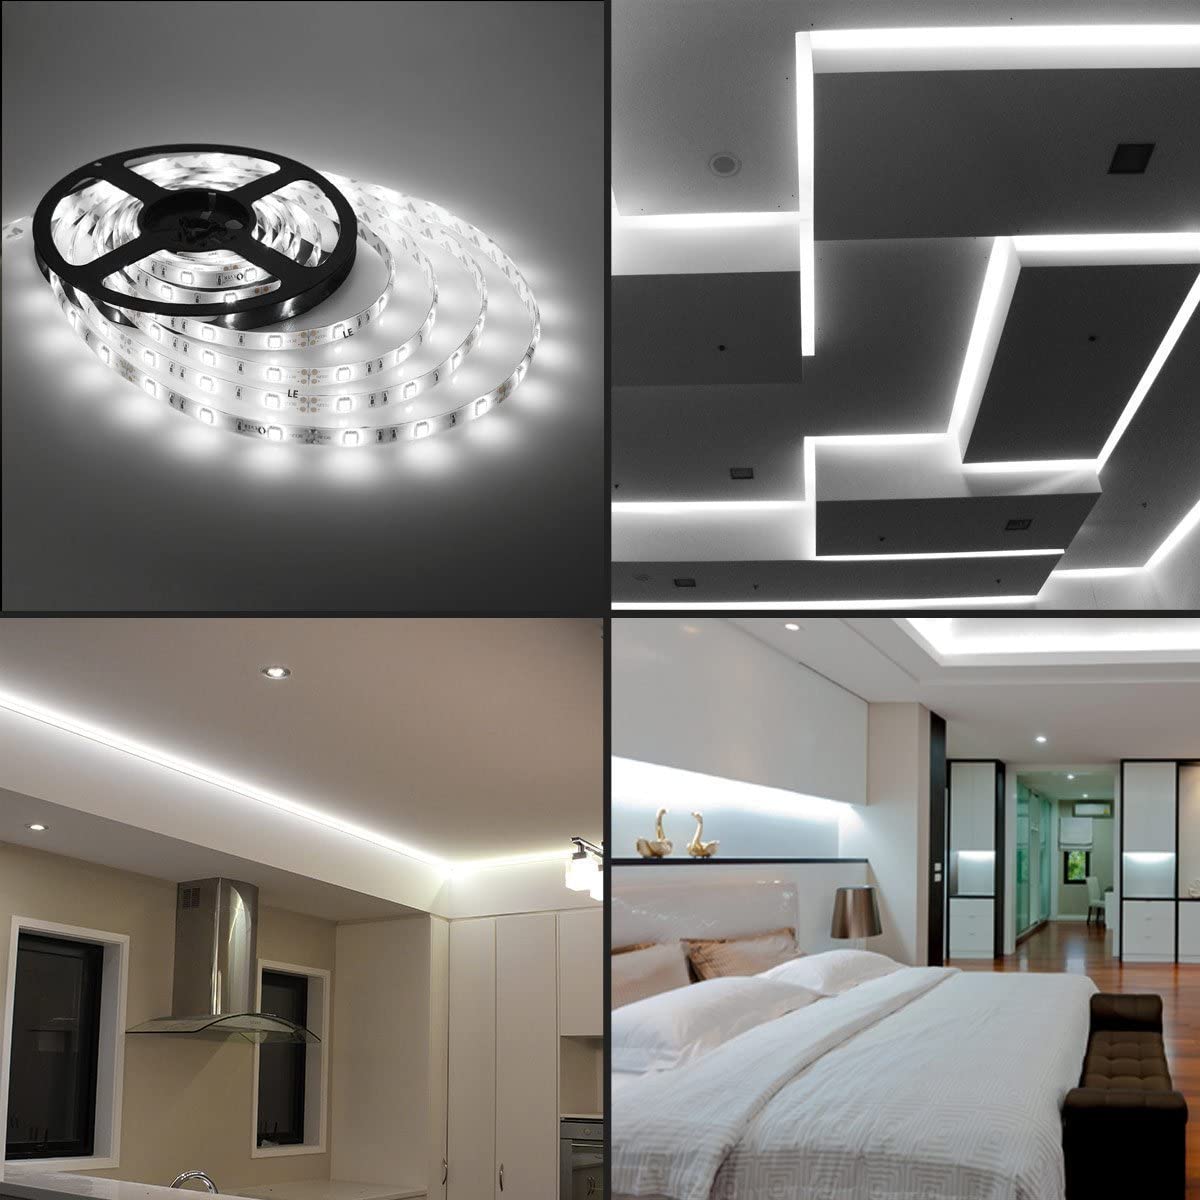 Flexible LED Strip Lights,300 Units SMD 5050 LEDs,LED Strips,Waterproof